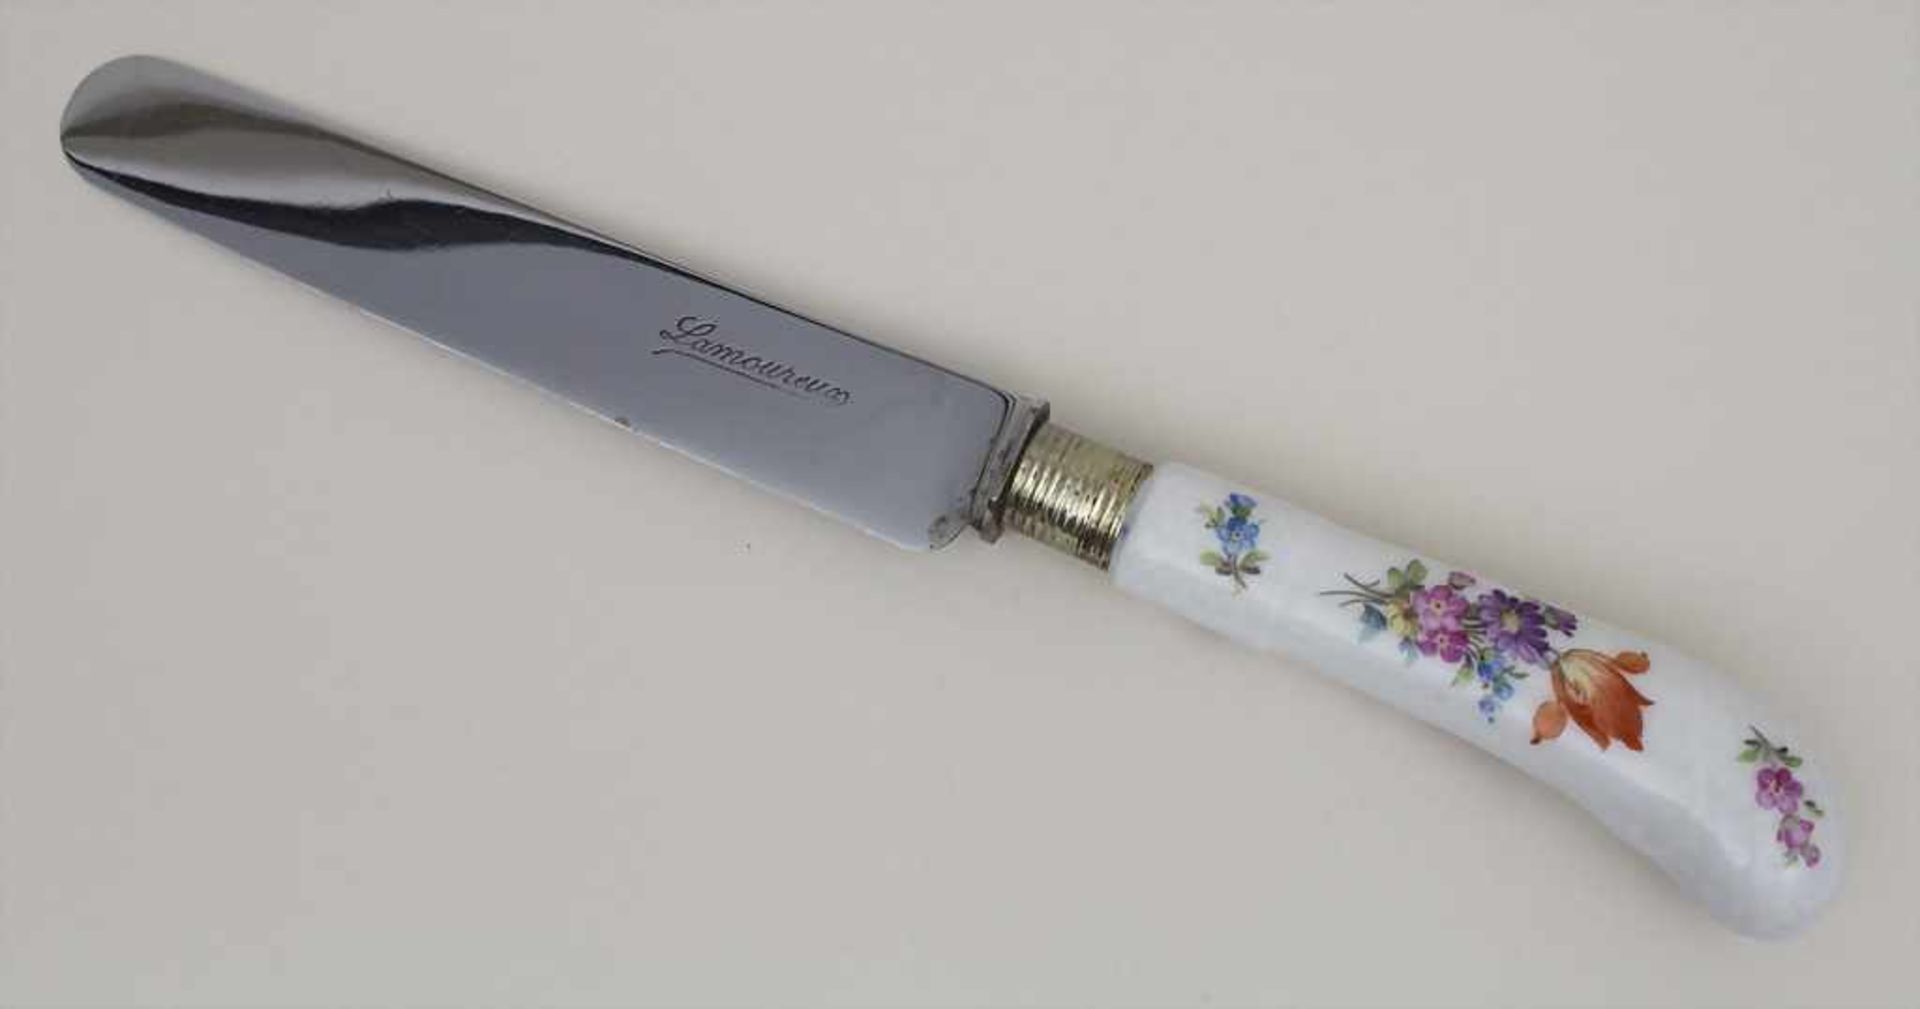 Messer mit Porzellangriff / A knife with porcelain handle, deutsch, Ende 19. JhMaterial: